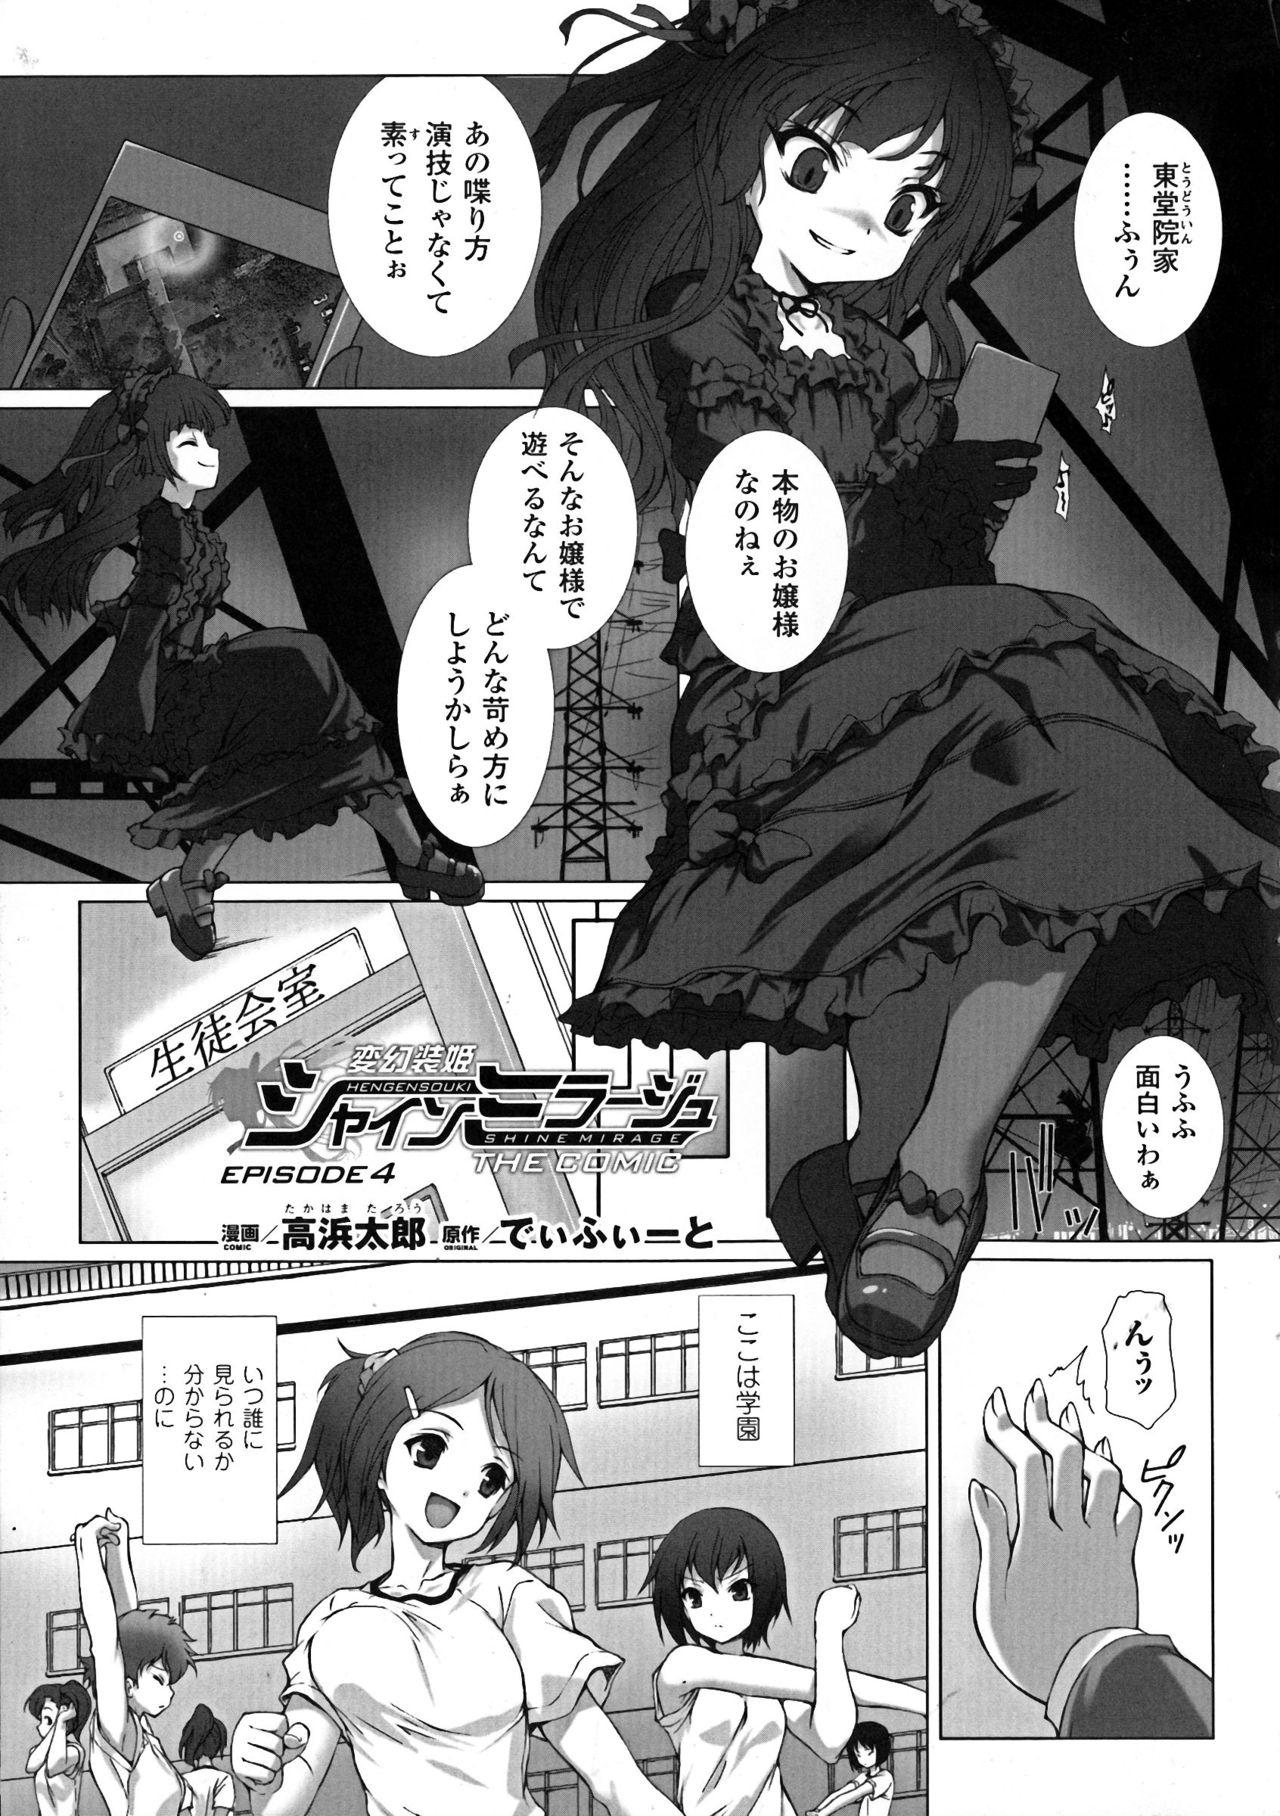 Seigi no Heroine Kangoku File DX vol. 6 4